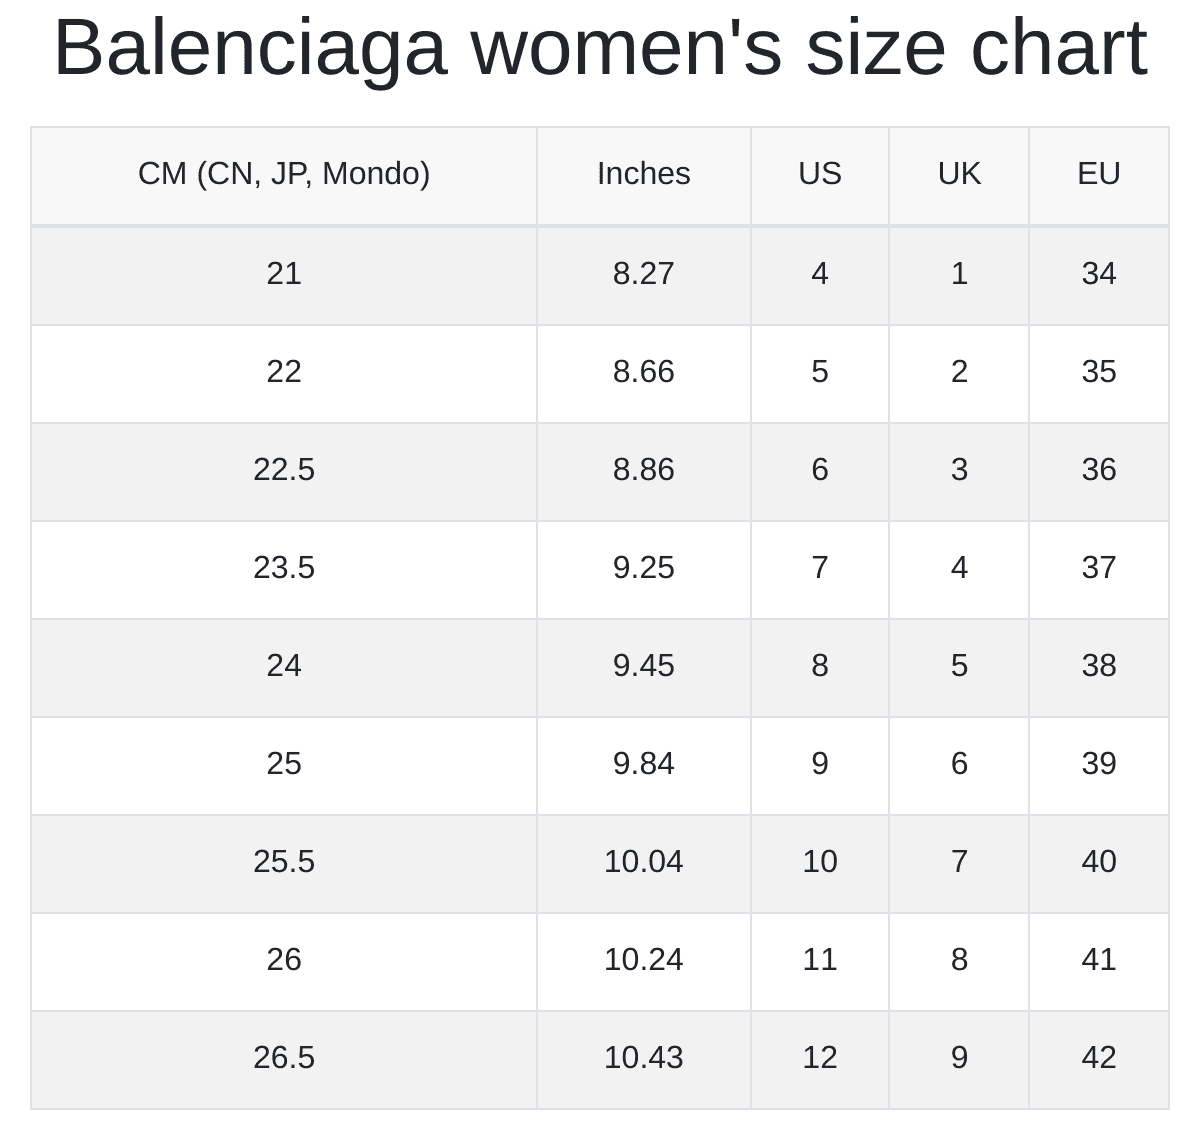 Balenciaga men's and women's size chart | RunRepeat